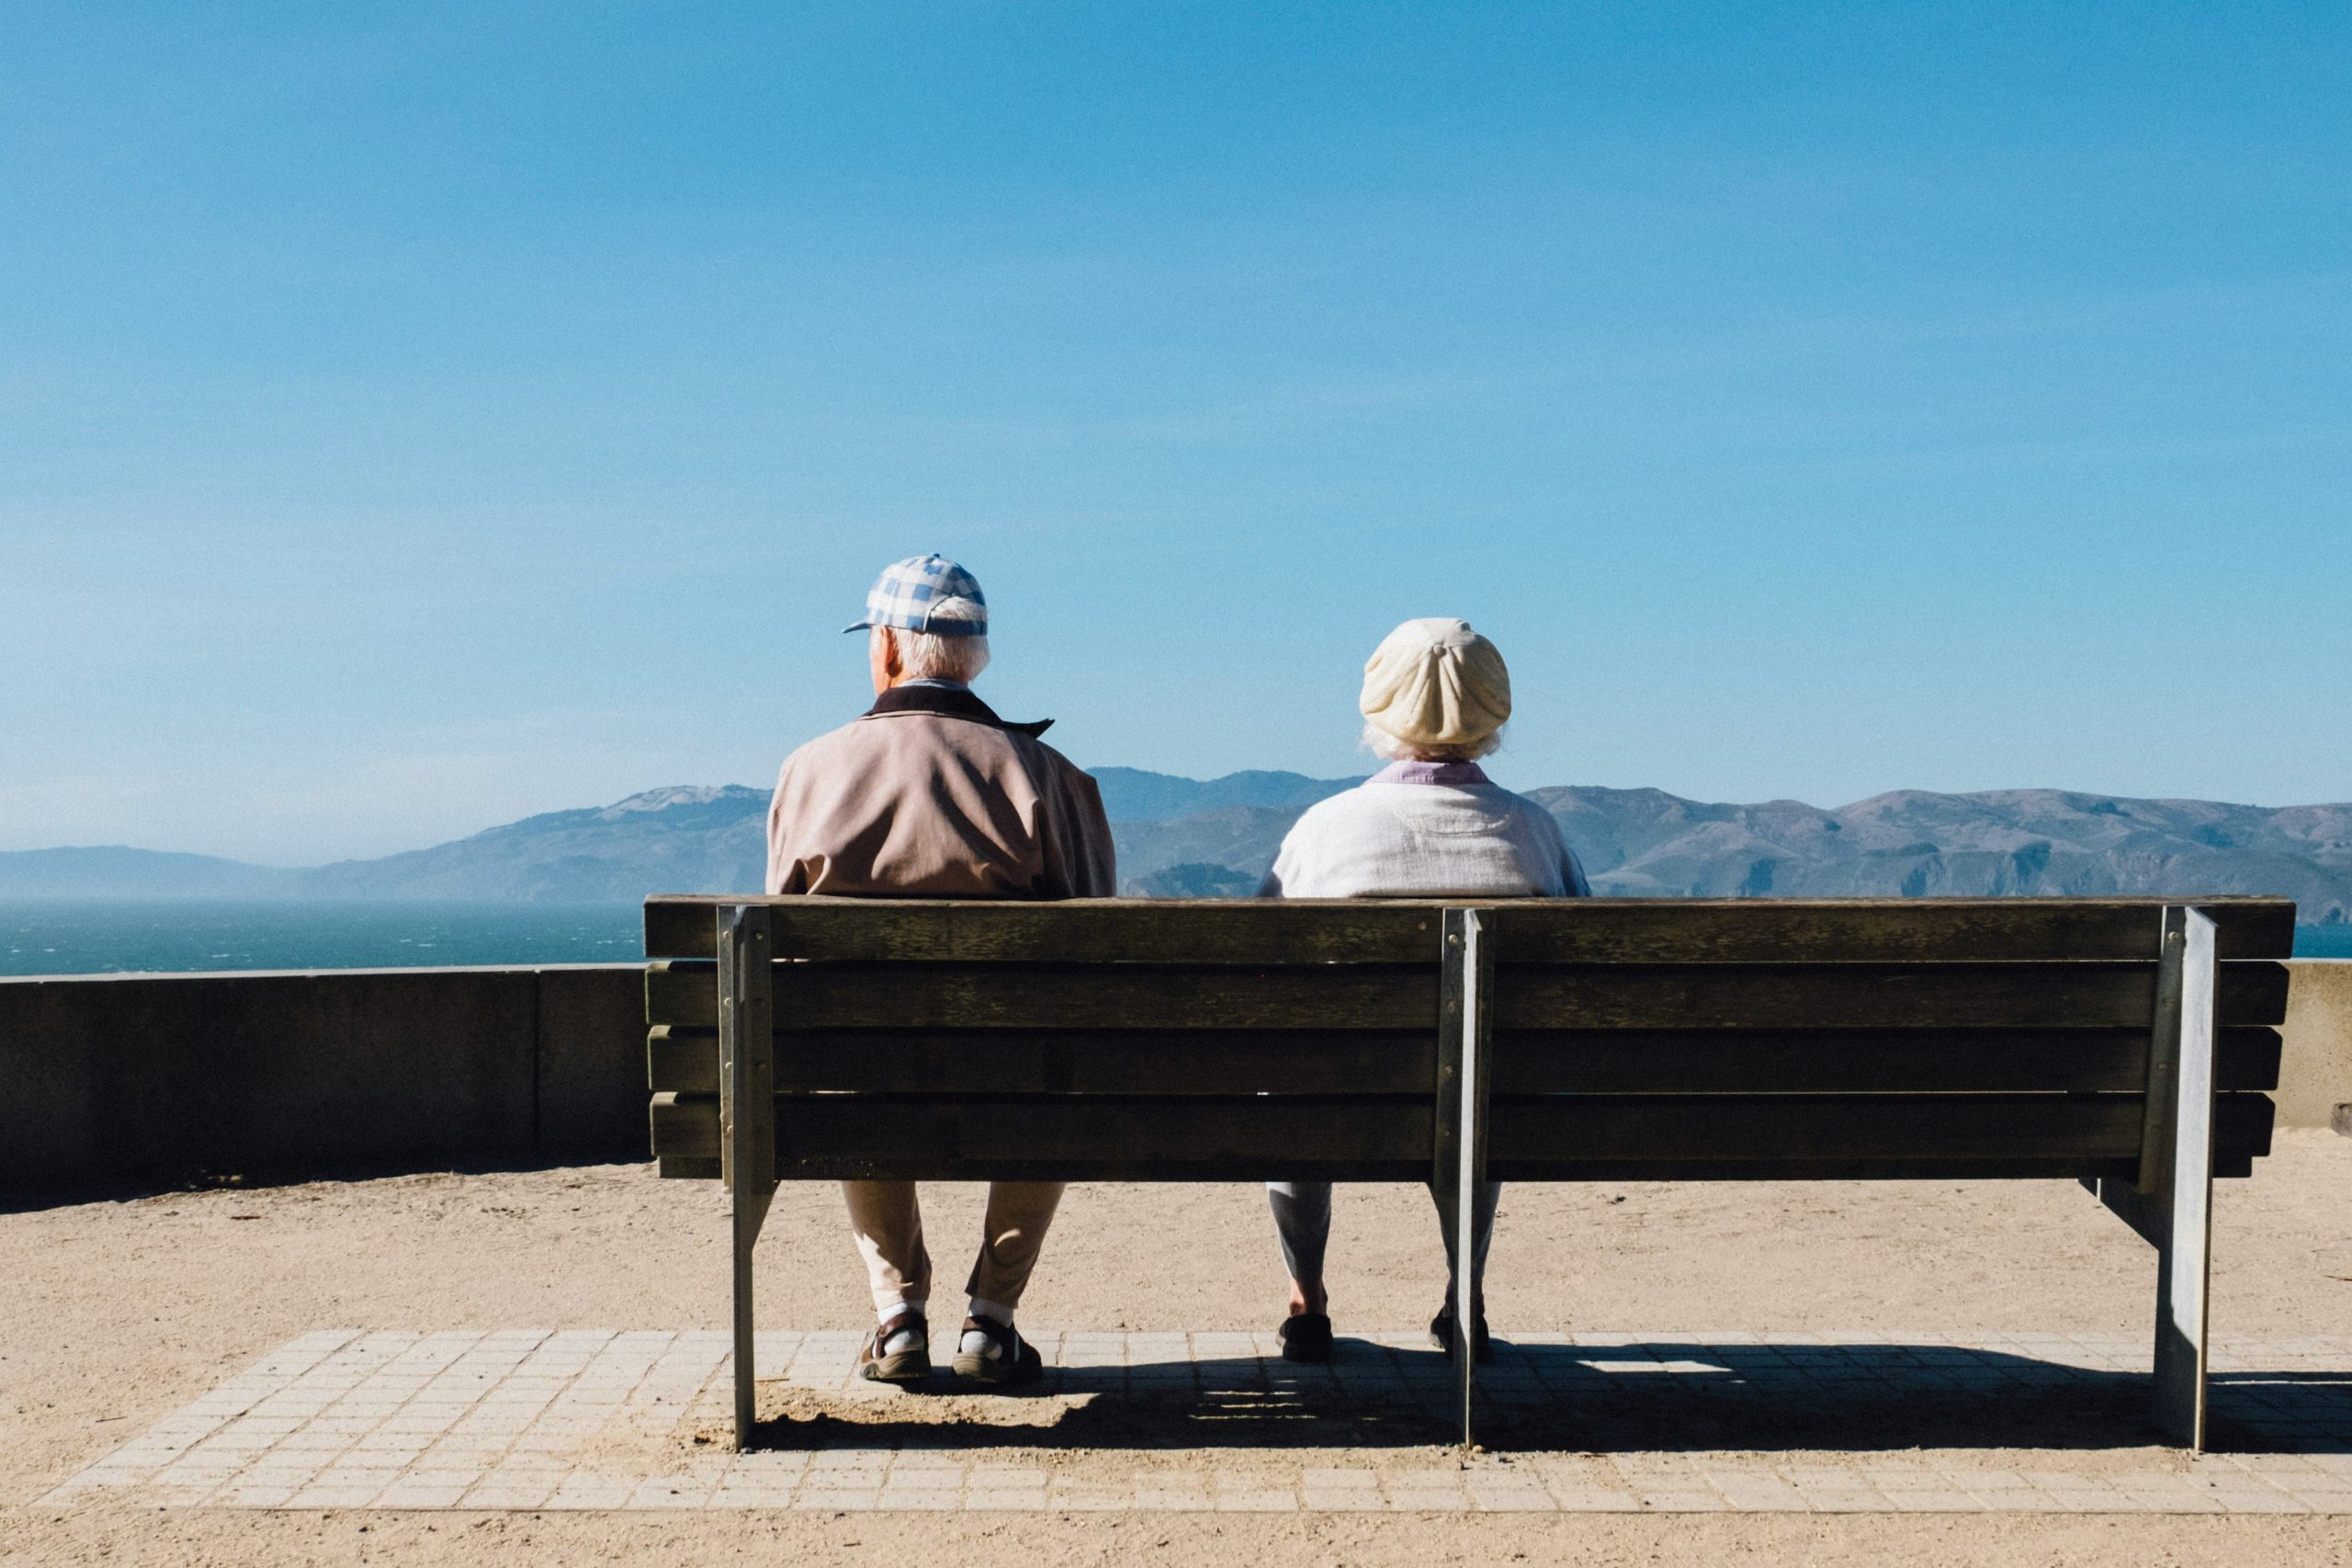 Lifestyle Enhancements for Seniors Seeking Fulfillment